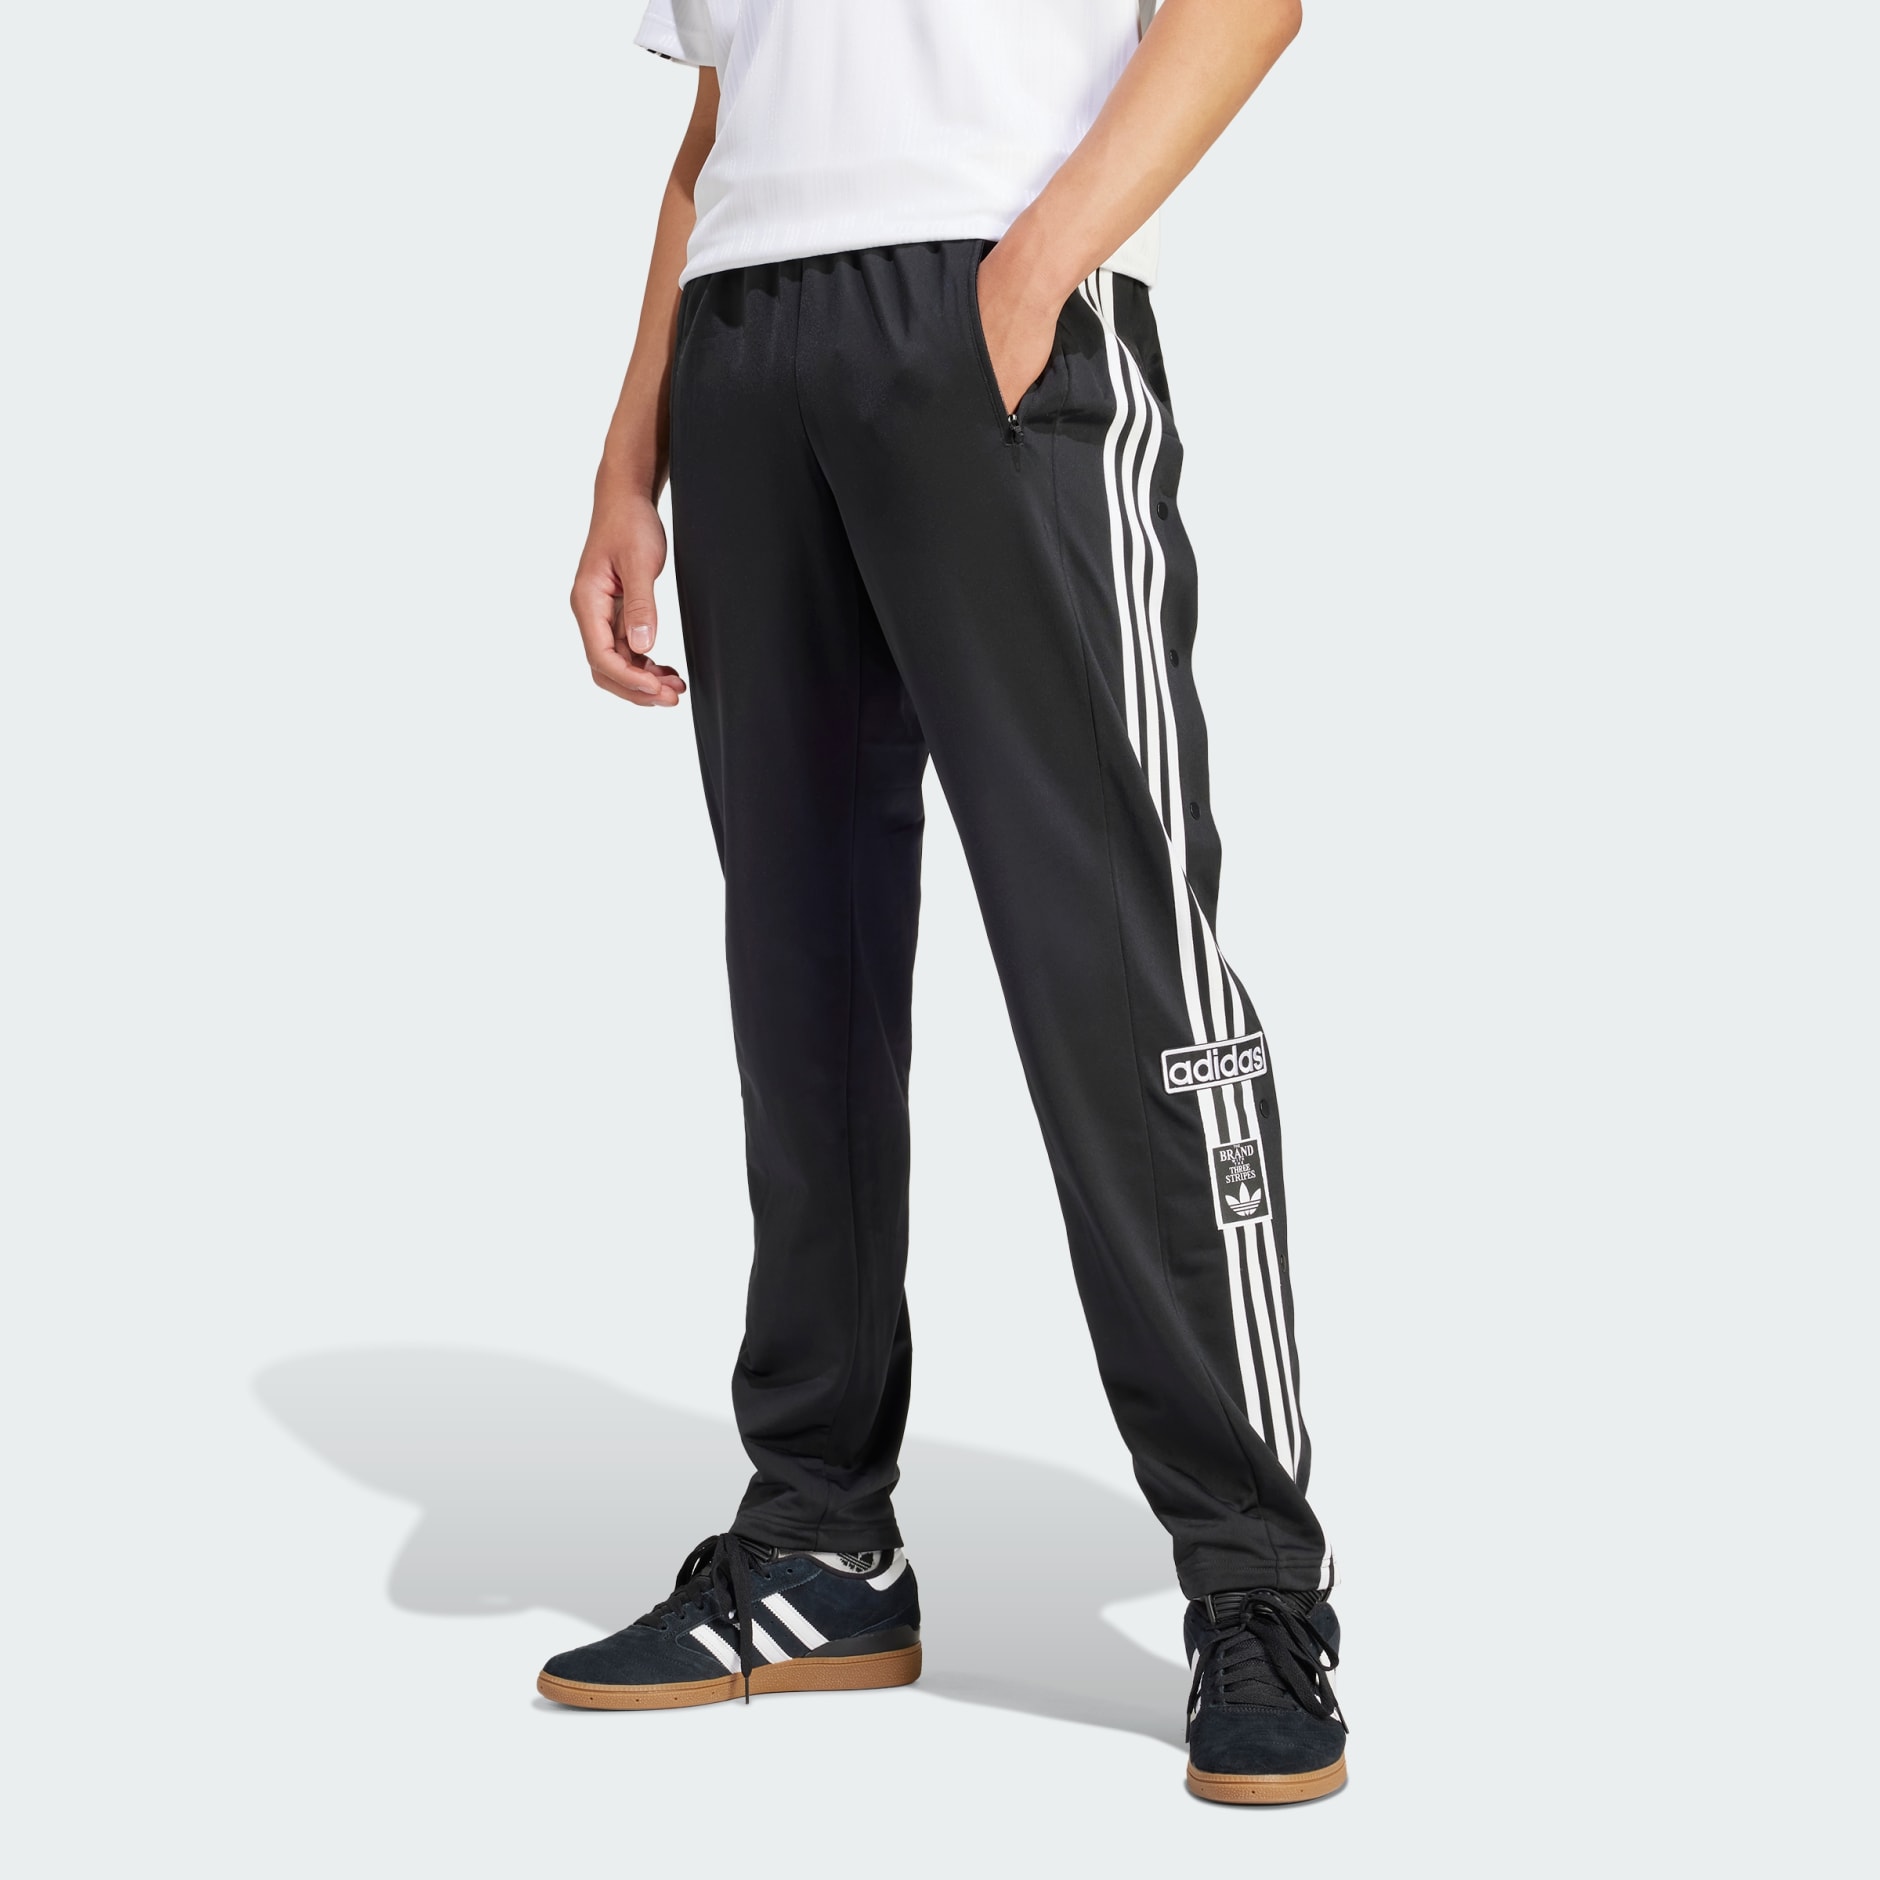 Adidas Originals Adibreak Track Pants Sports Pants Button Row